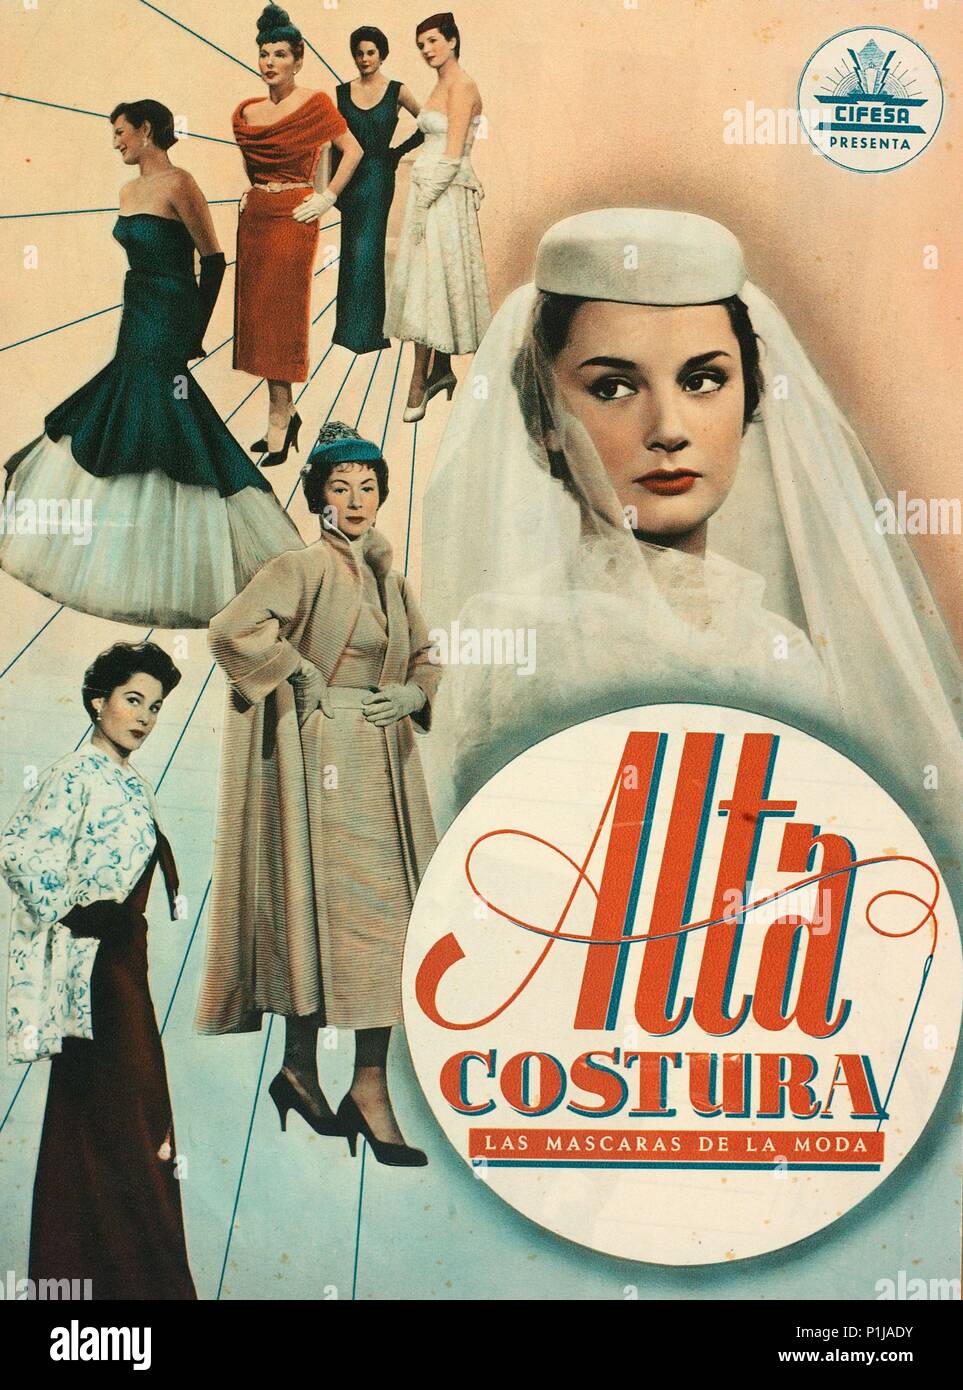 Original Film Titel: ALTA COSTURA. Englischer Titel: ALTA COSTURA. Regisseur: LUIS MARQUINA. Jahr: 1954. Credit: CINESOL, S.A/Album Stockfoto